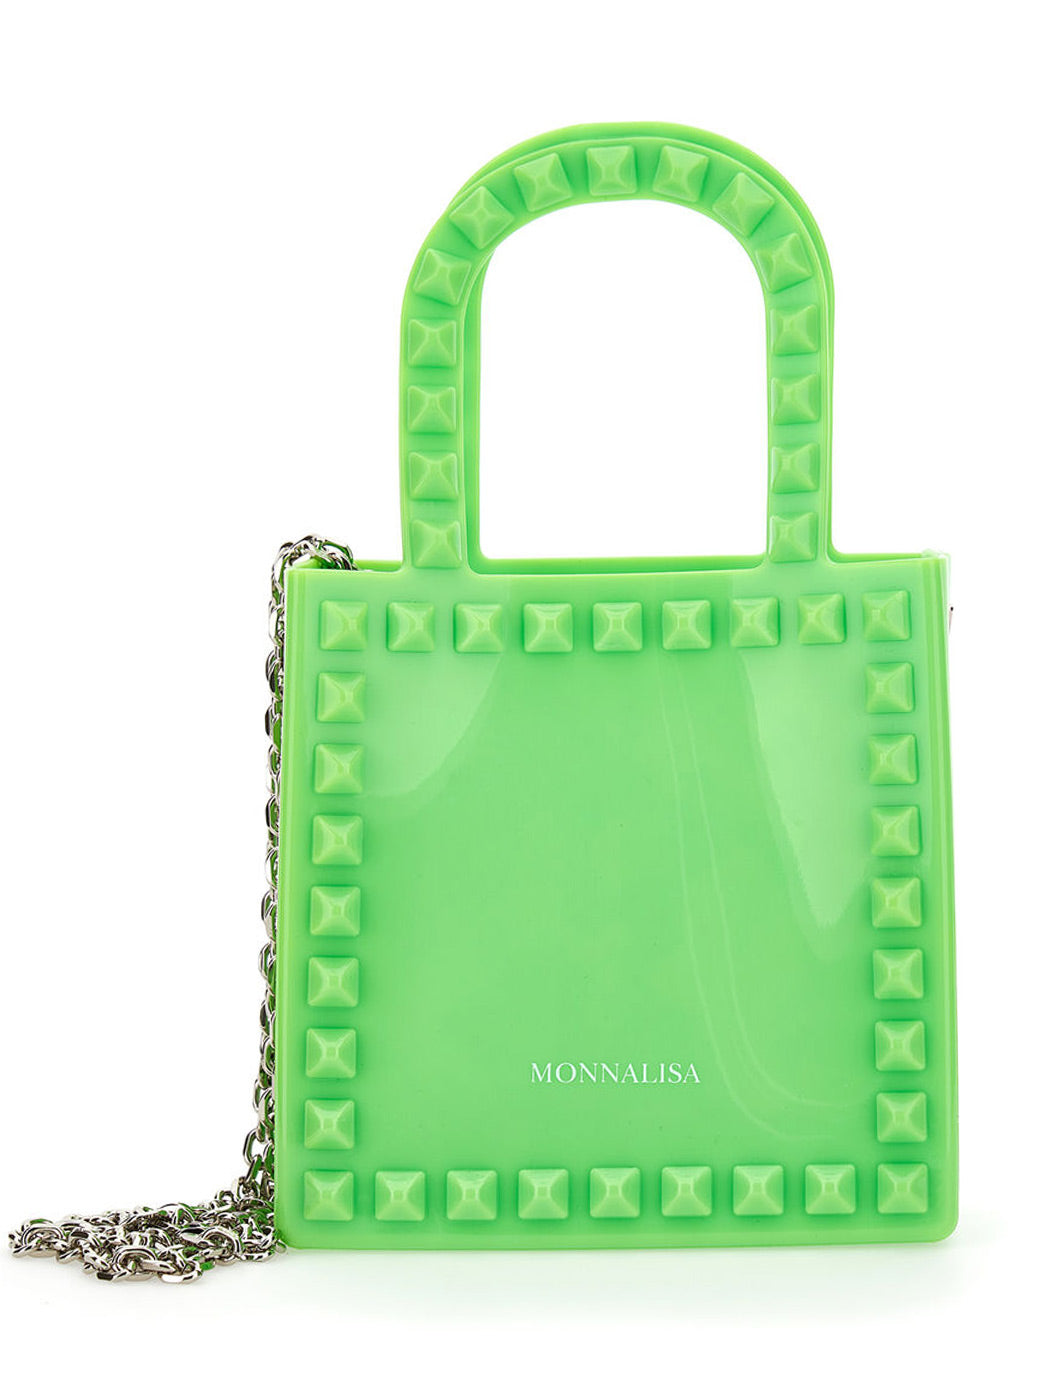 MONNALISA green pvc handbag for girl-17A009